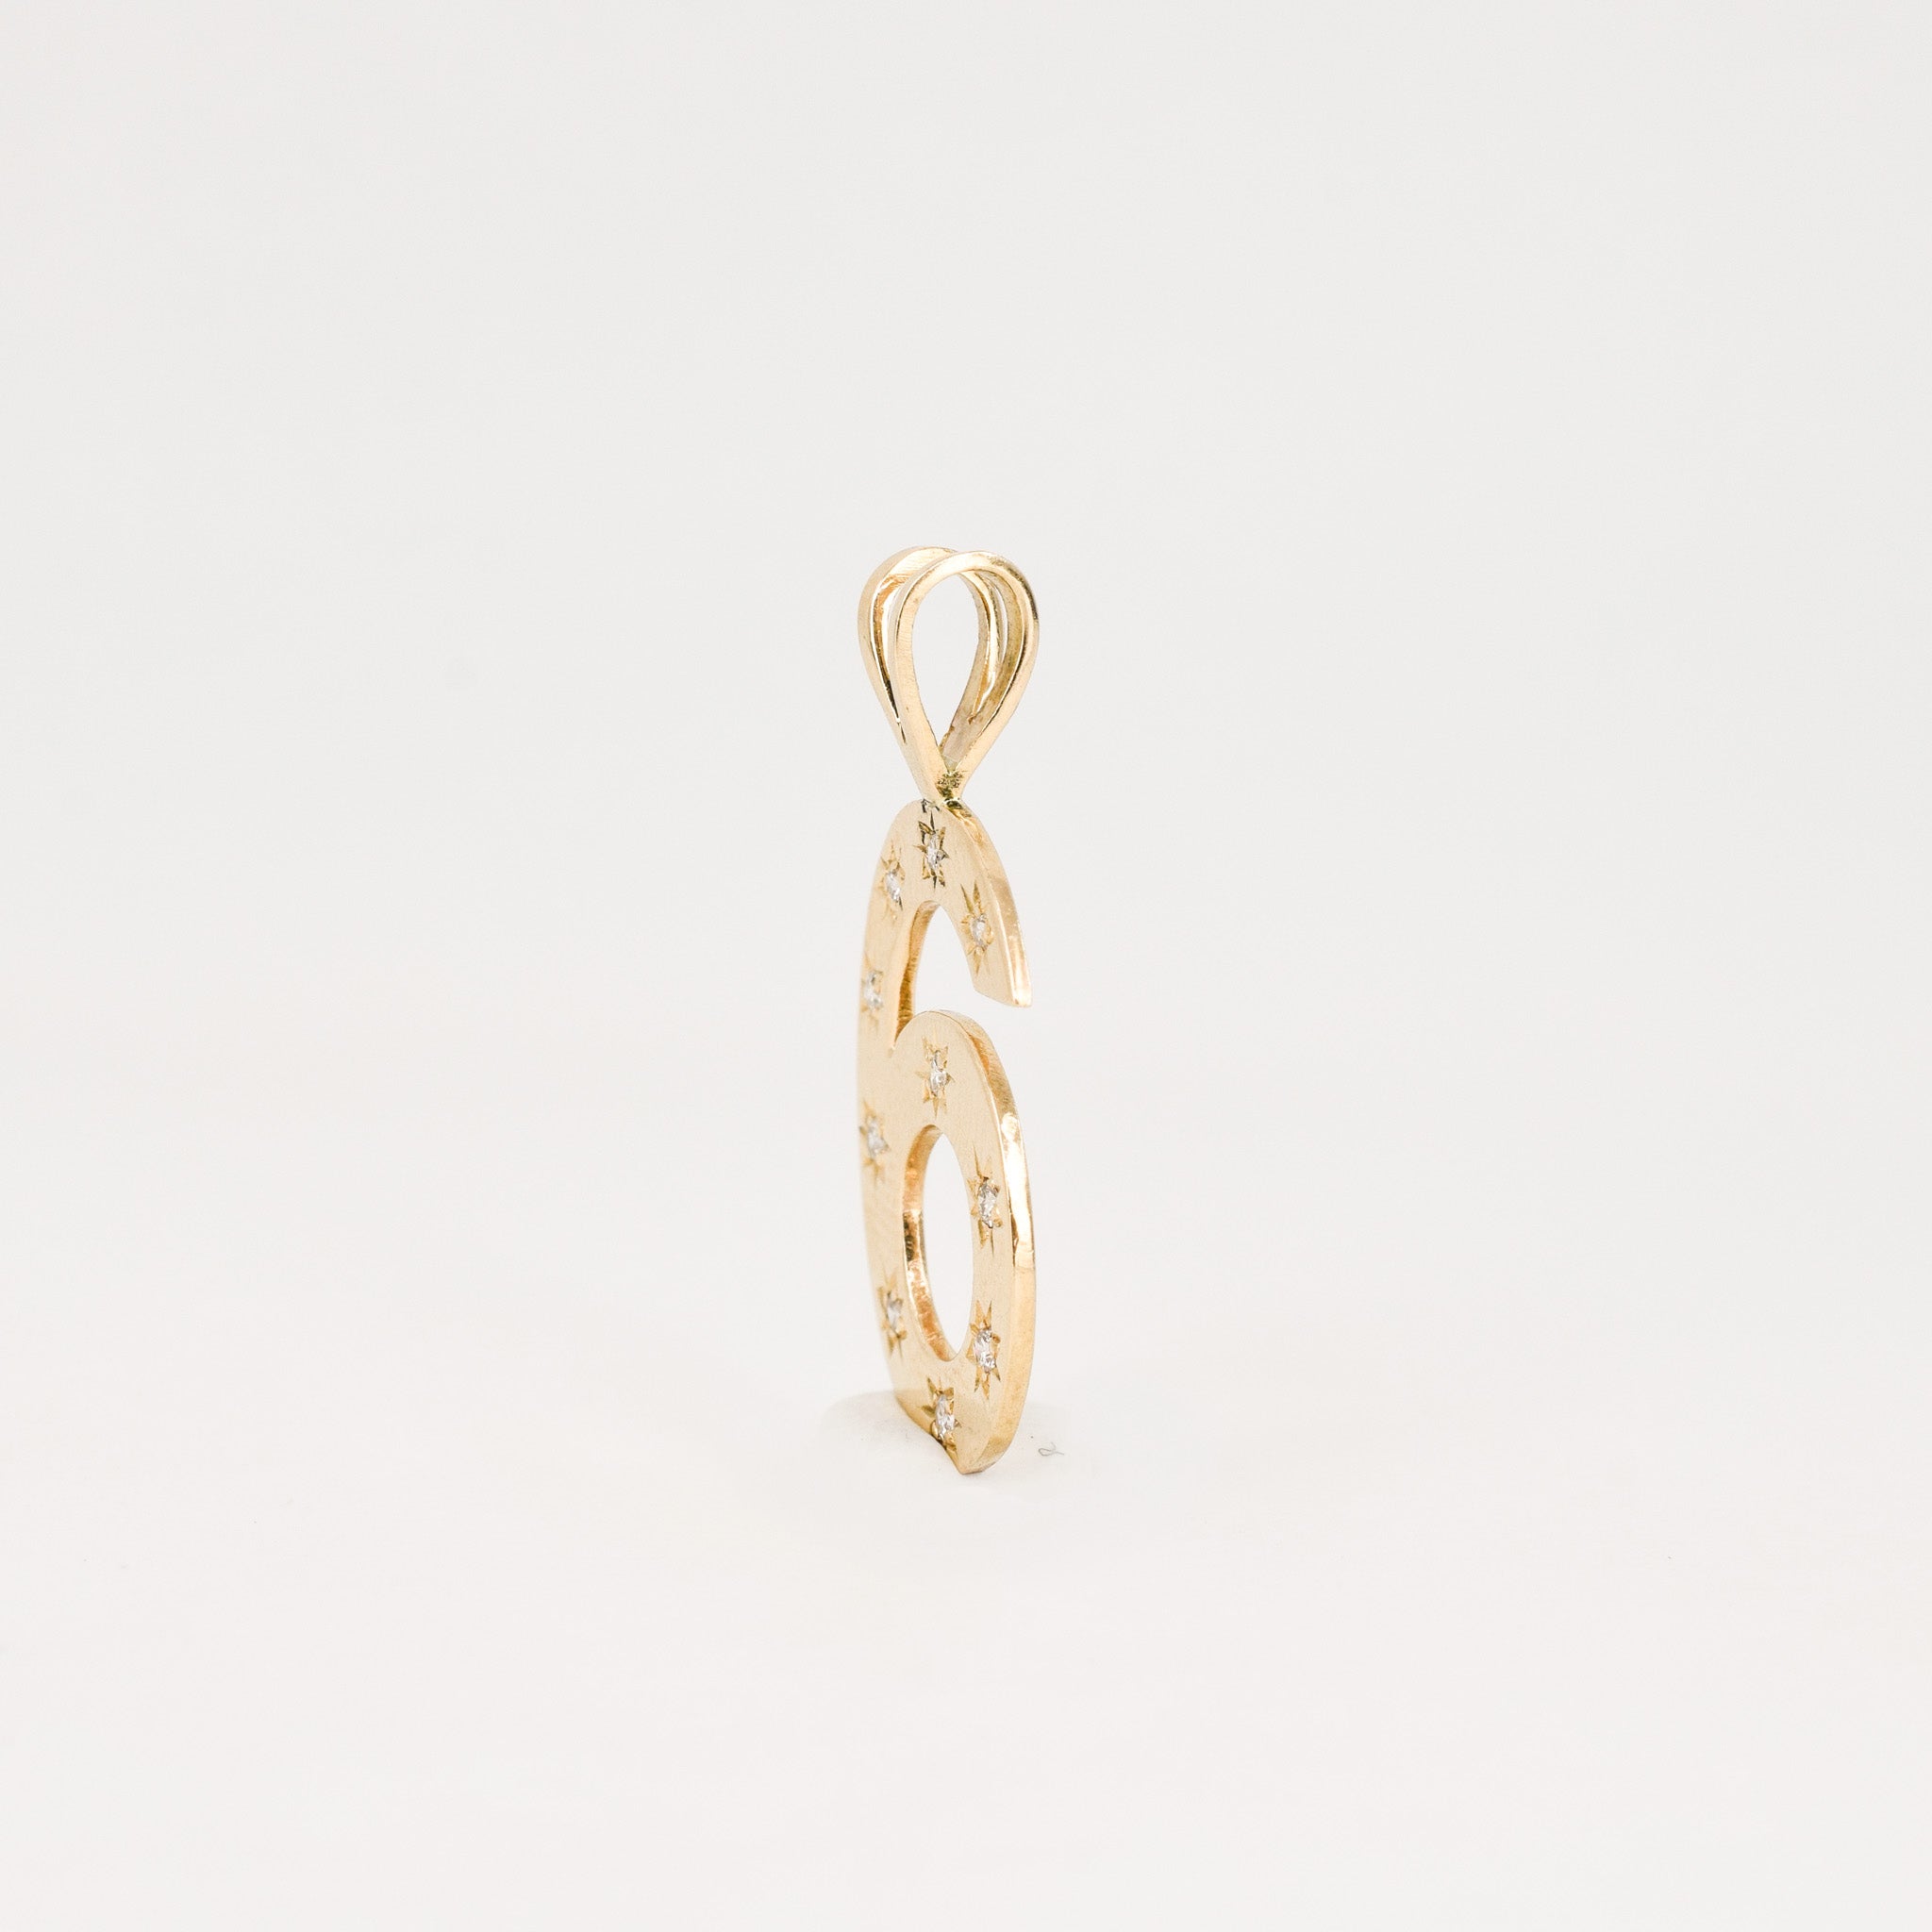 vintage gold 6 pendant with starburst diamonds, folklor vintage jewelry canada 